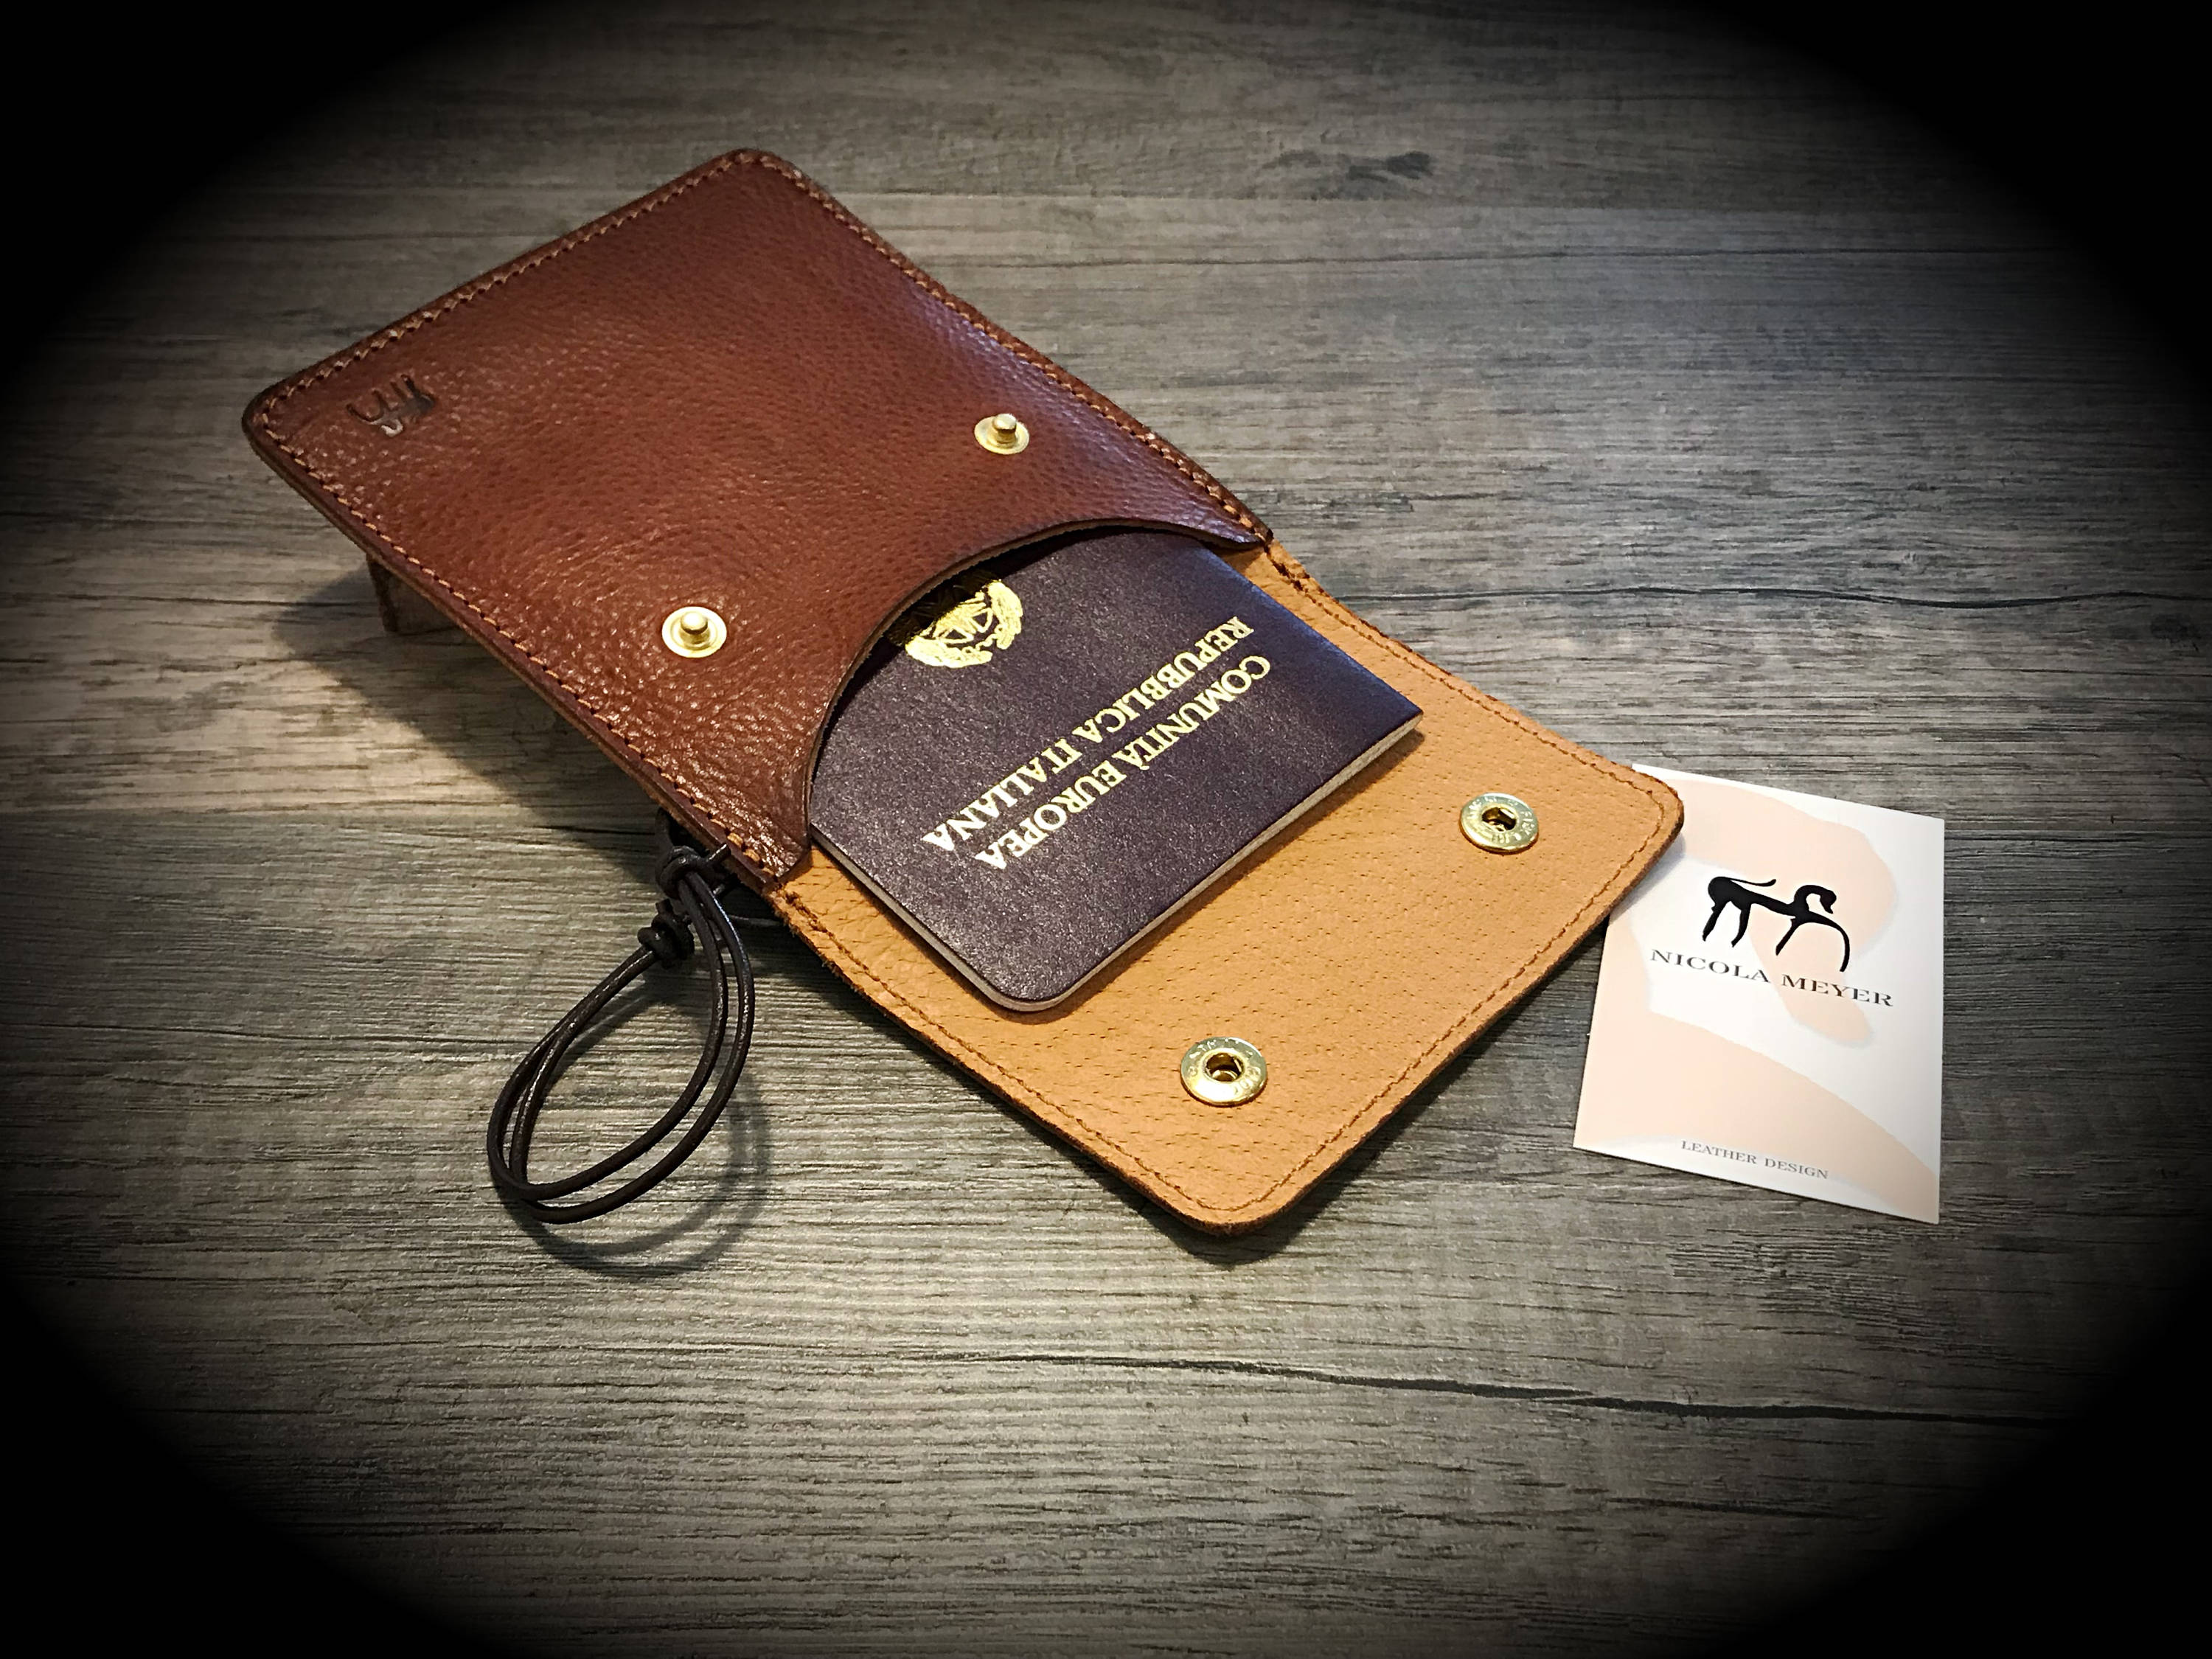 Veg-Tanned Leather Passport Wallet / Case